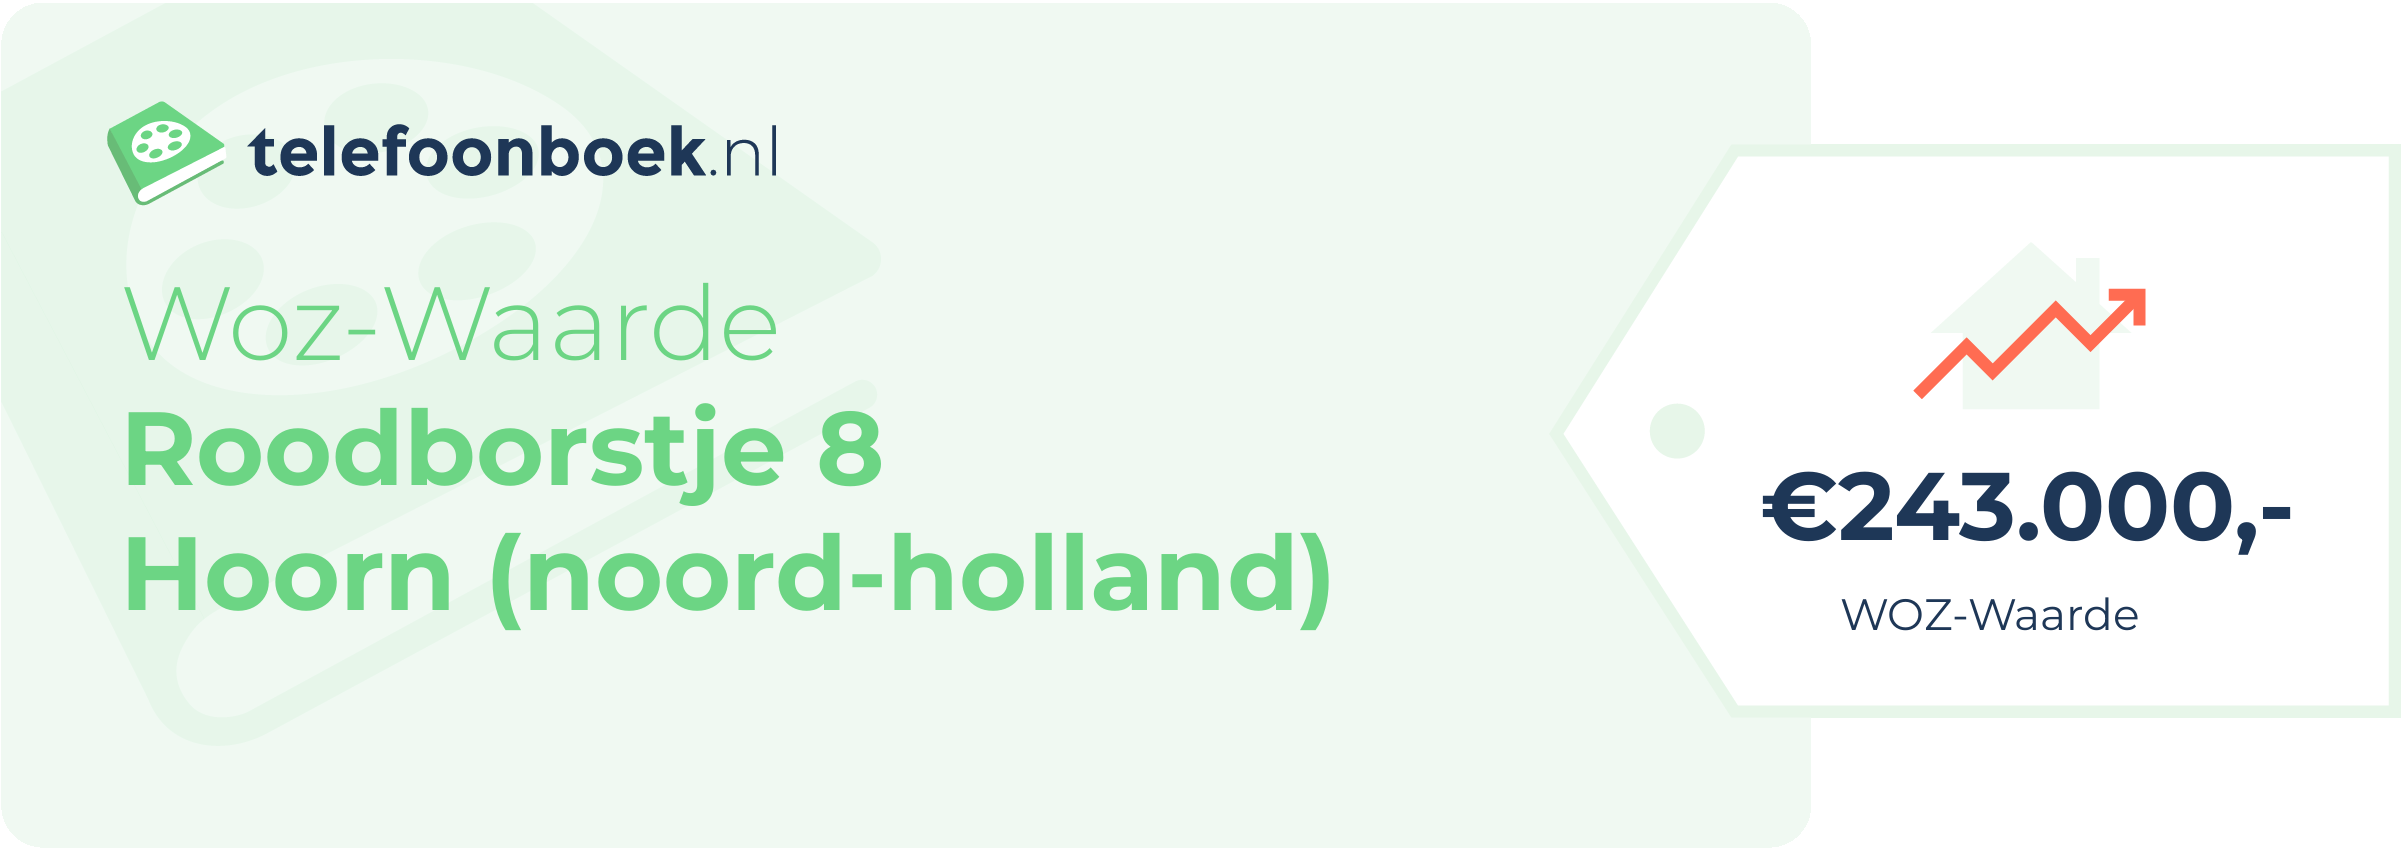 WOZ-waarde Roodborstje 8 Hoorn (Noord-Holland)